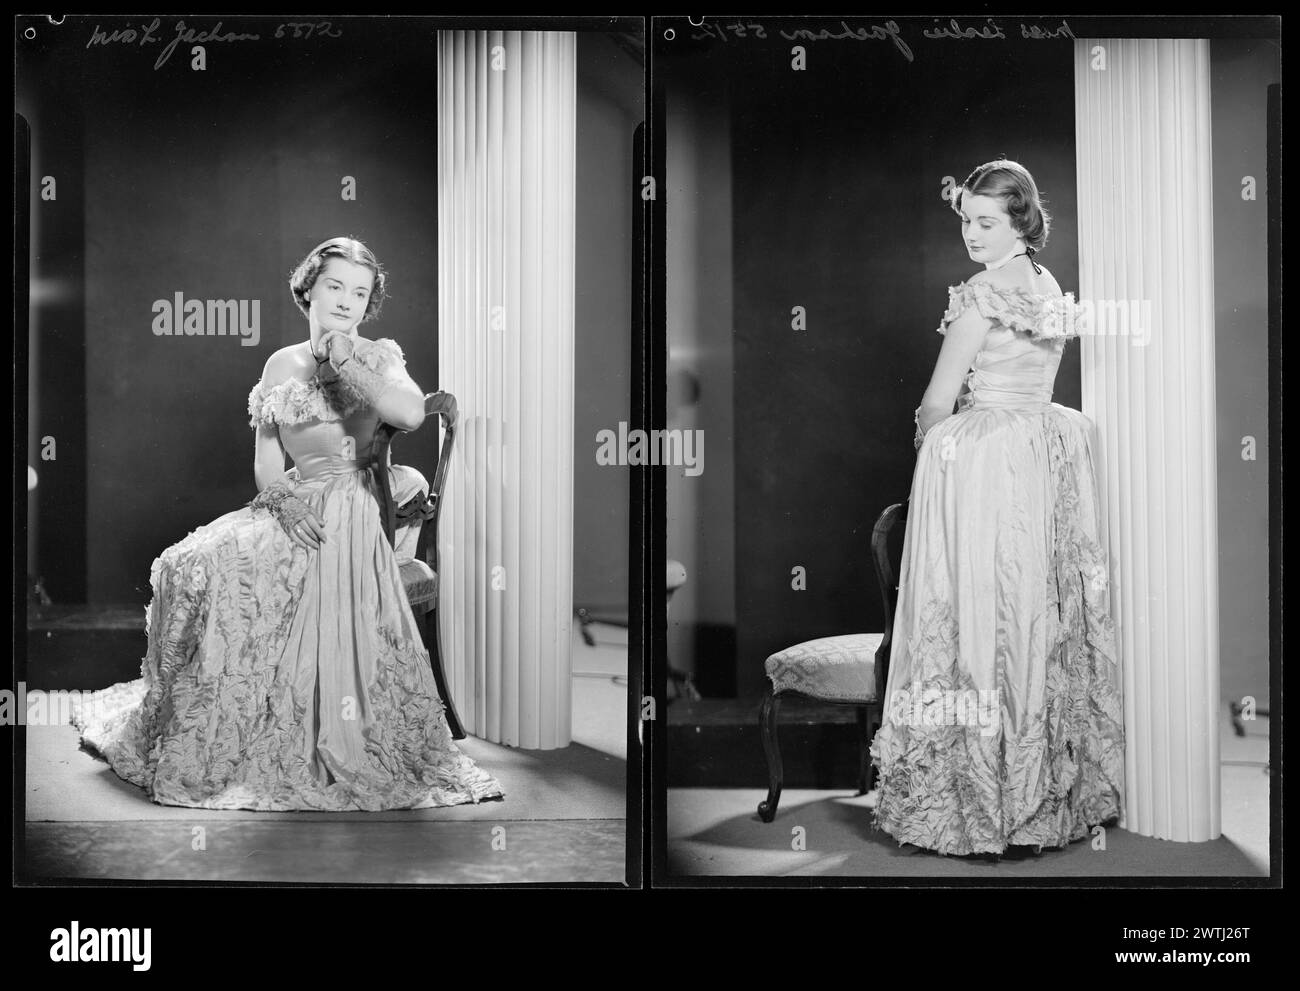 Miss Leslie Jackson negativi d'argento gelatina, negativi in bianco e nero, ritratti in studio Foto Stock